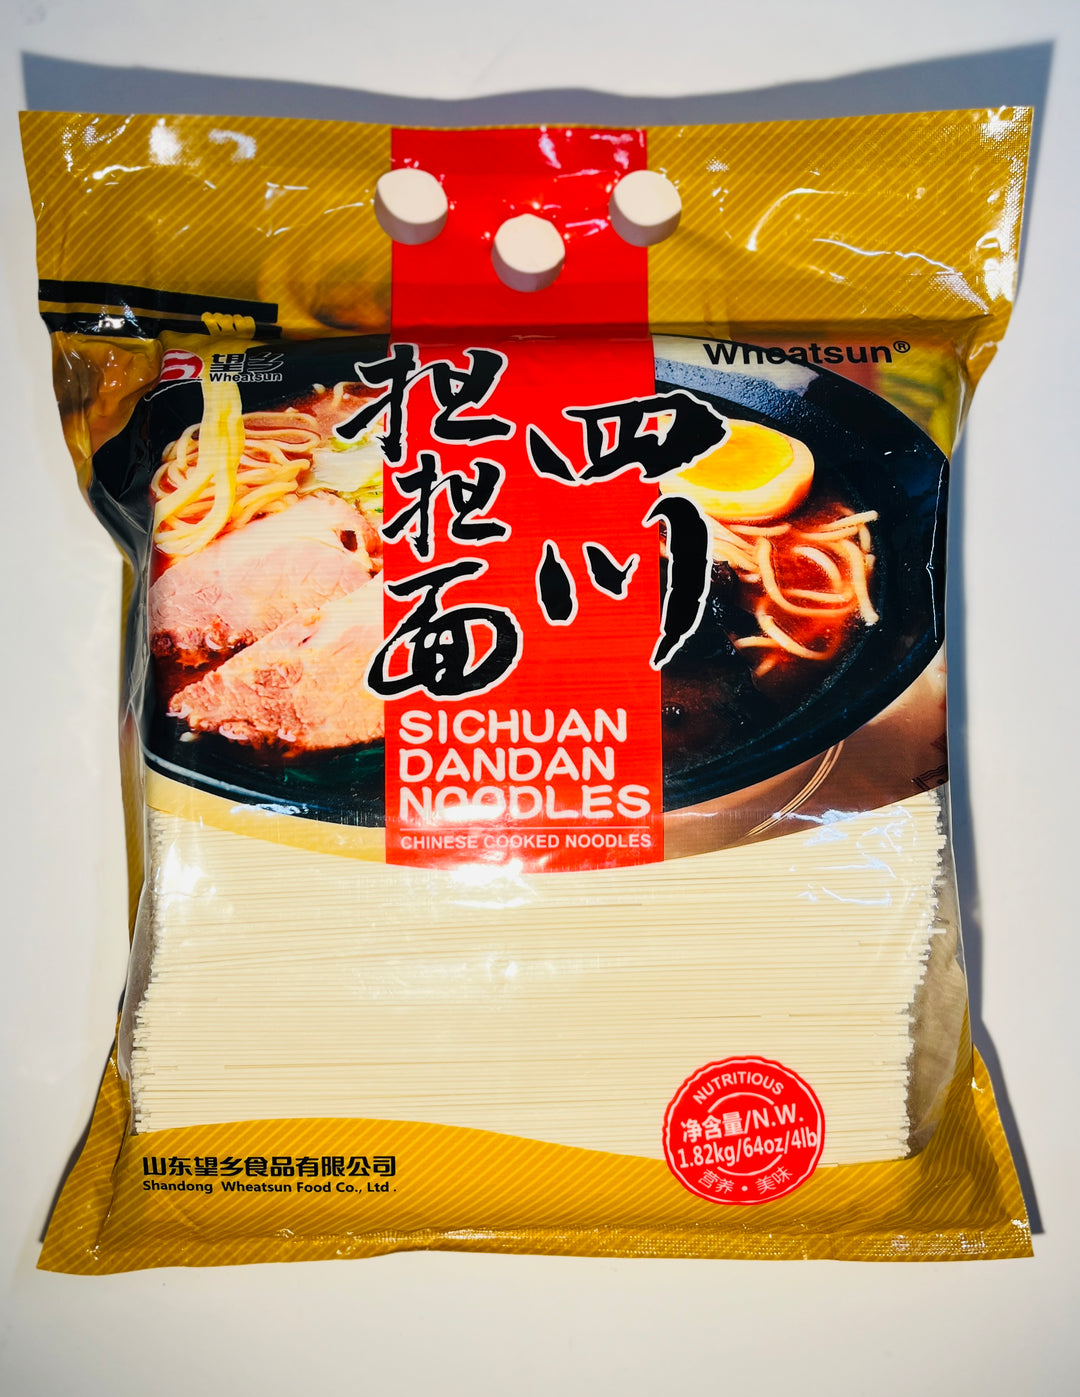 望乡四川担担面1.82kg Wheat Sun Sichuan Dan Dan Noodle